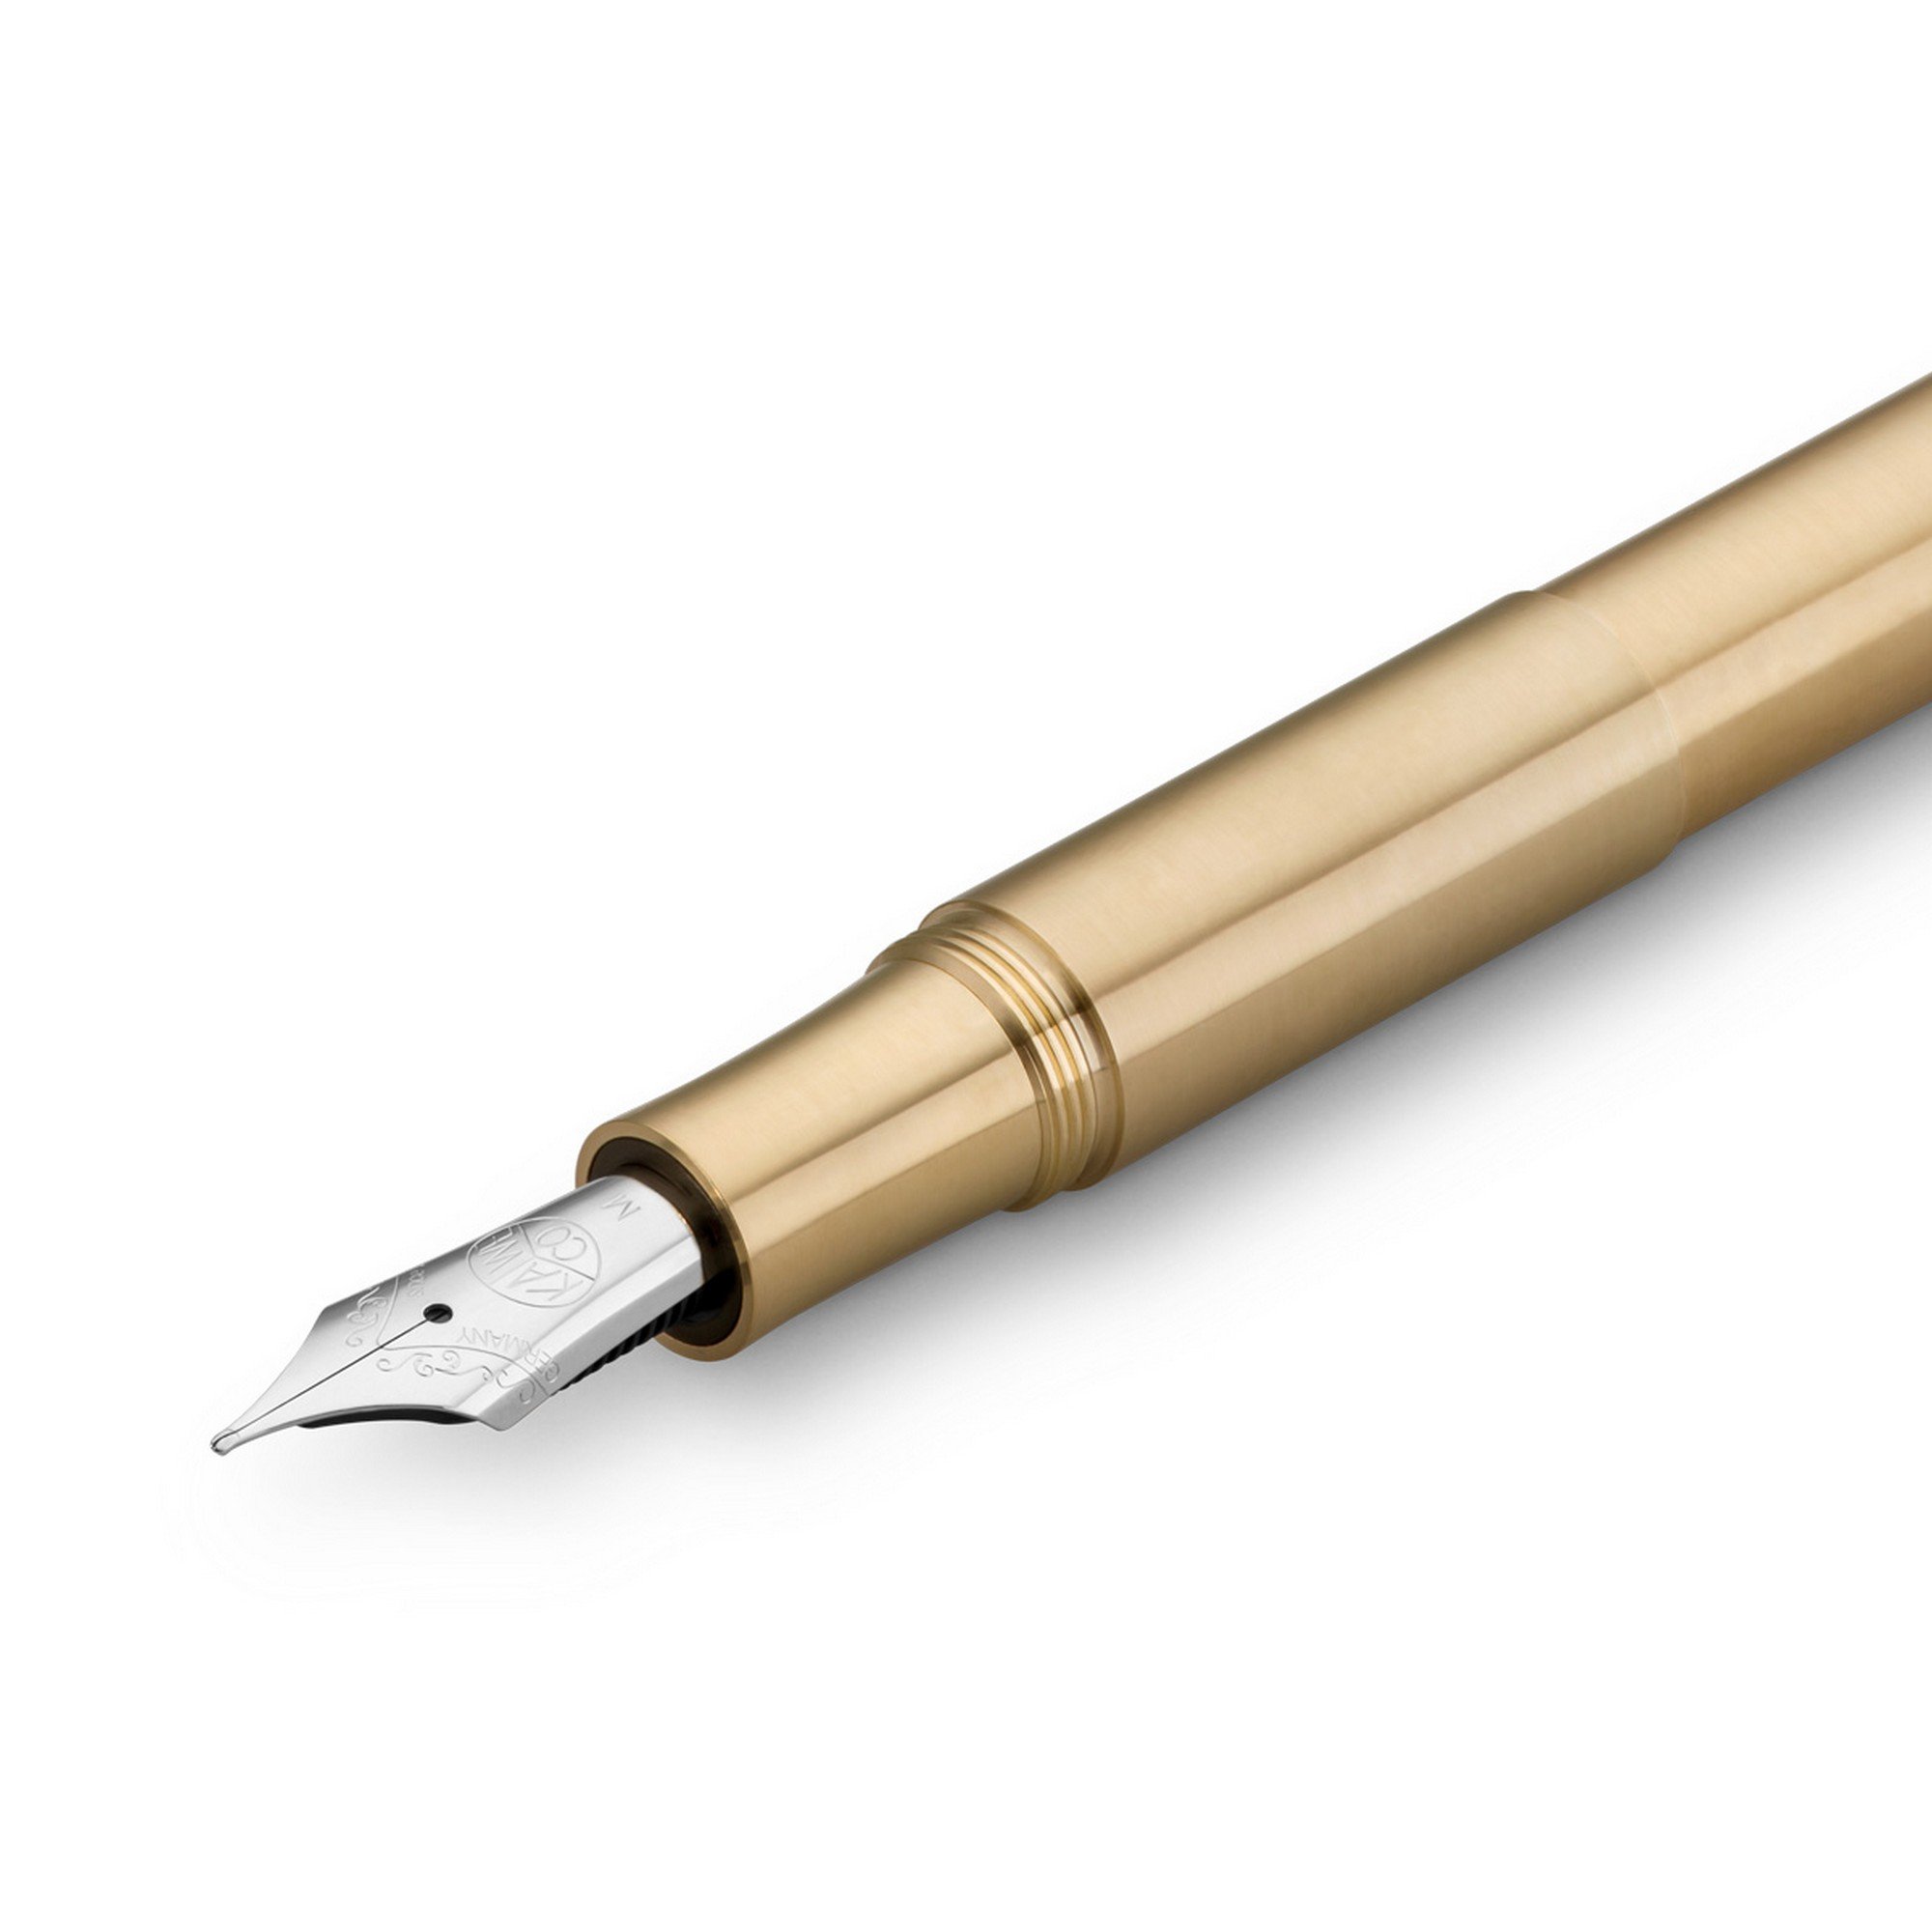 適切な価格 業務用30セット 三菱鉛筆 硬質色鉛筆 K7700.15 赤 12本